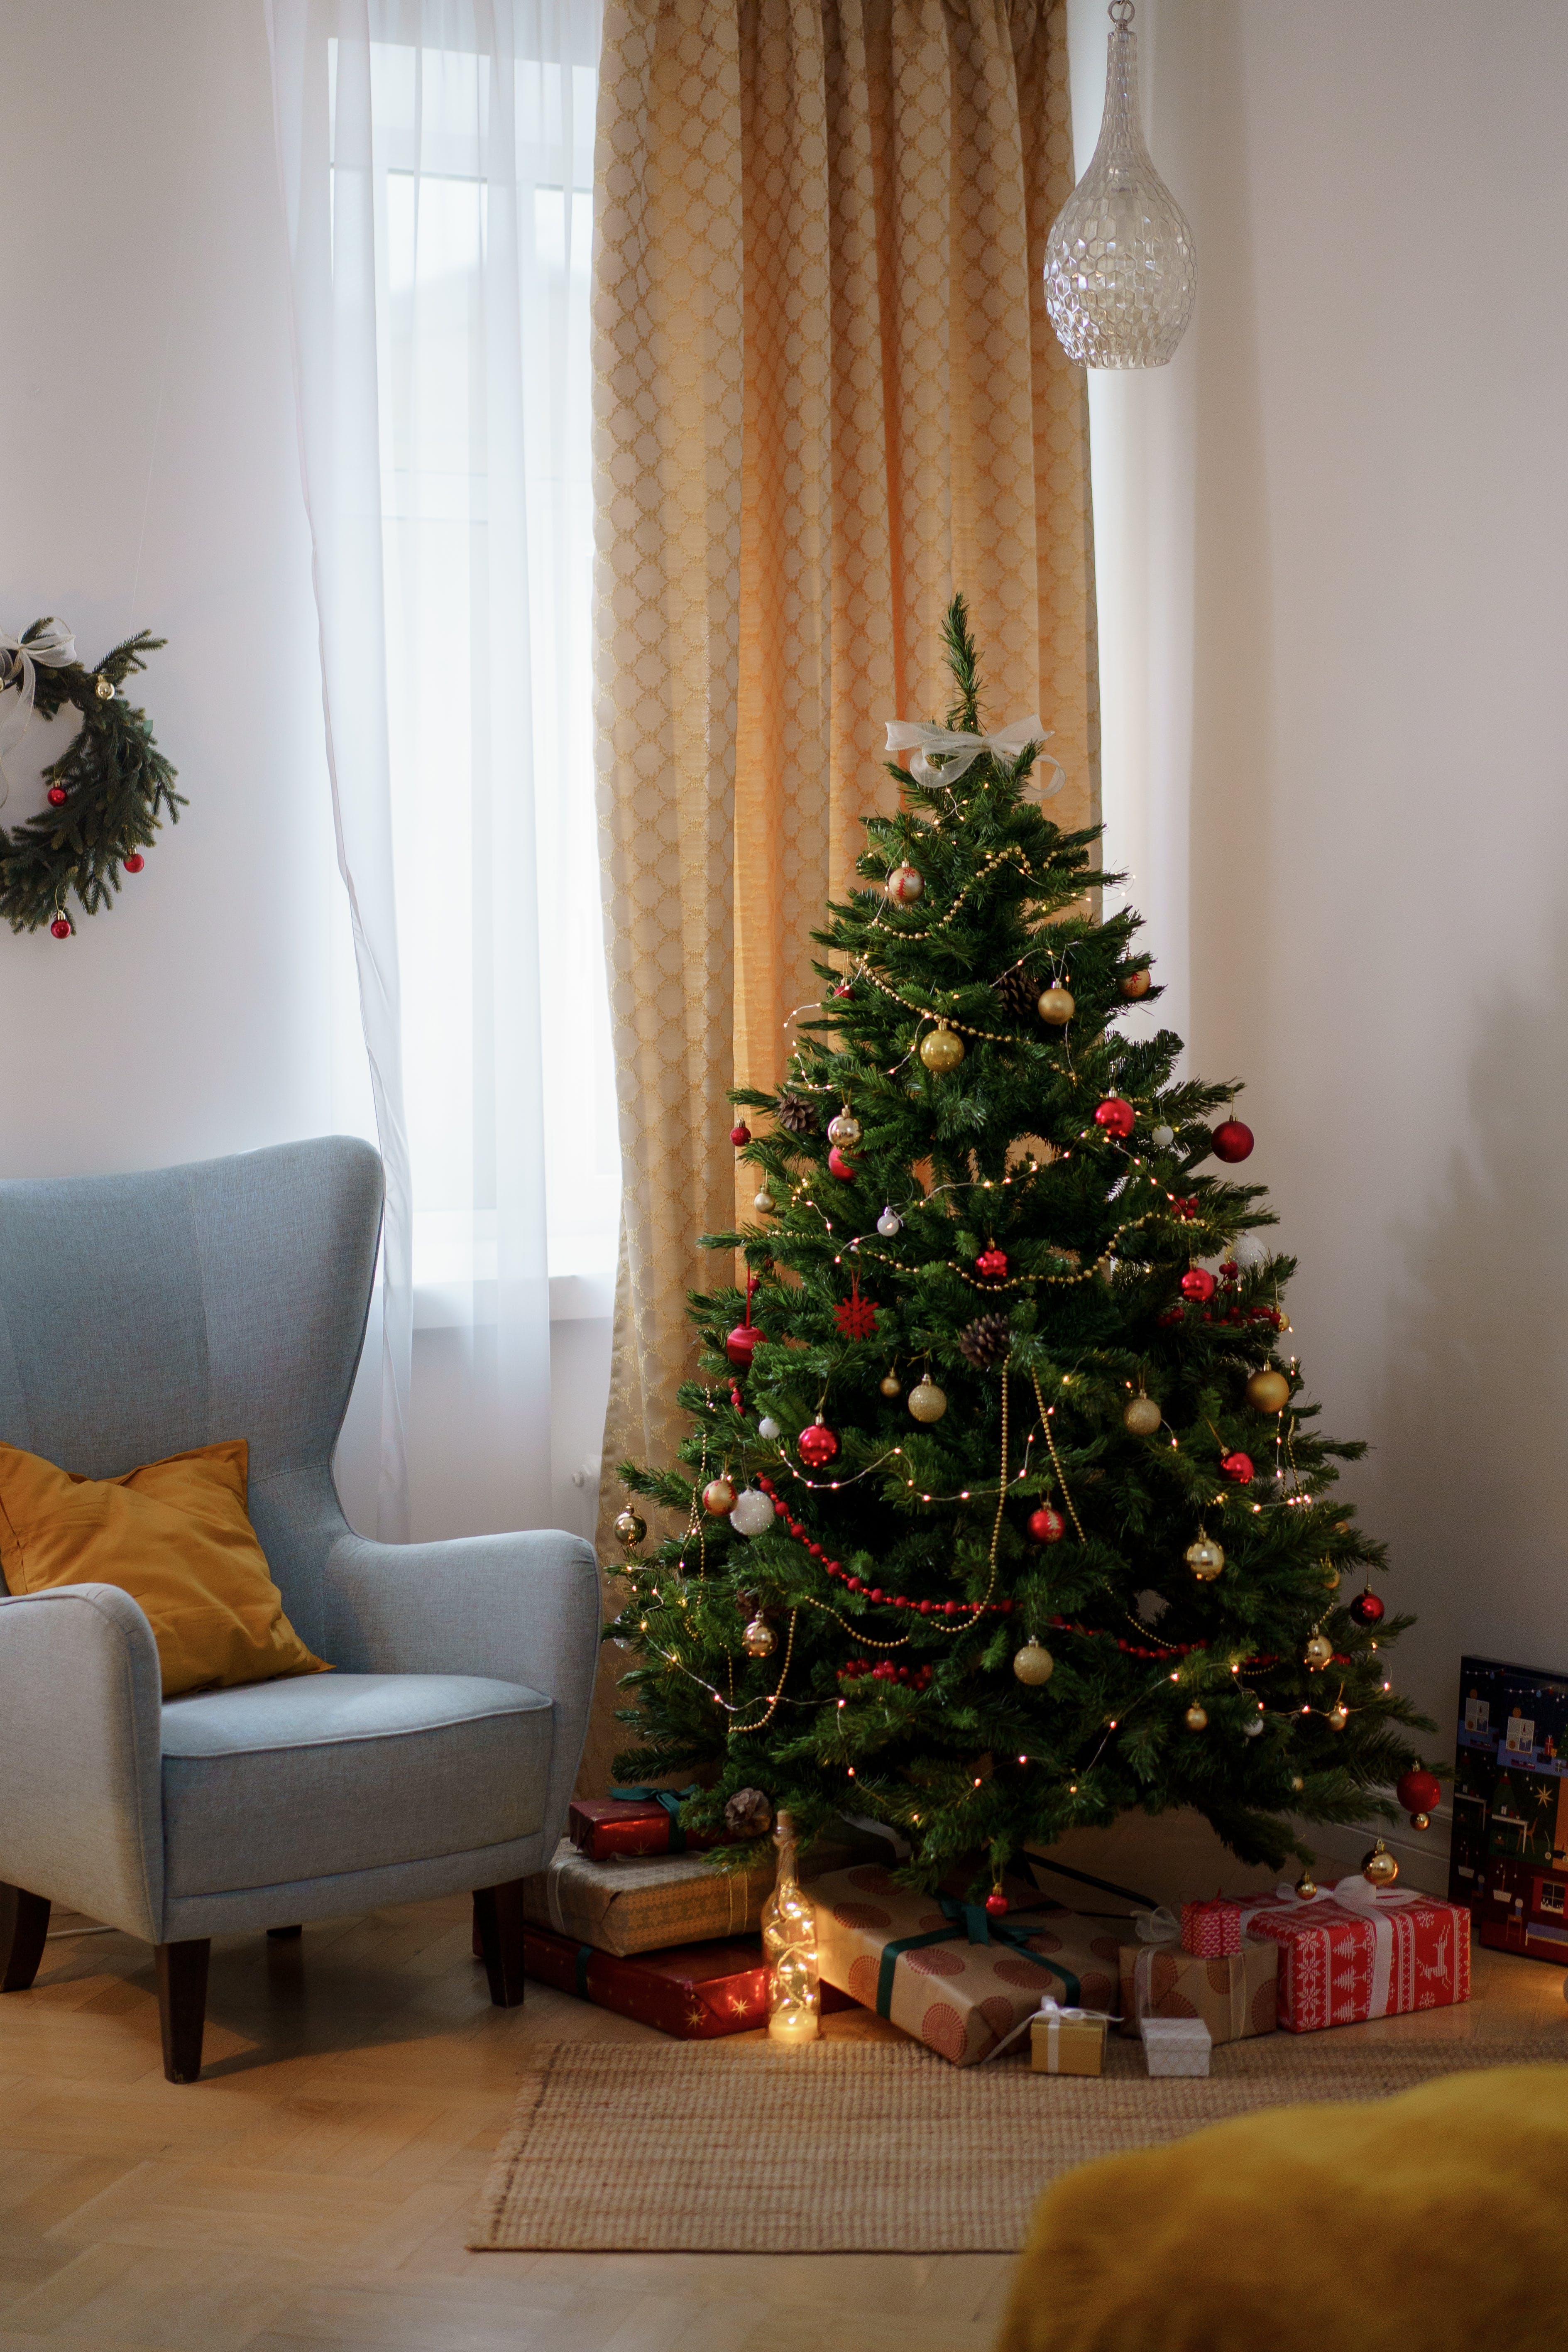 A Christmas tree set up | Source: Pexels